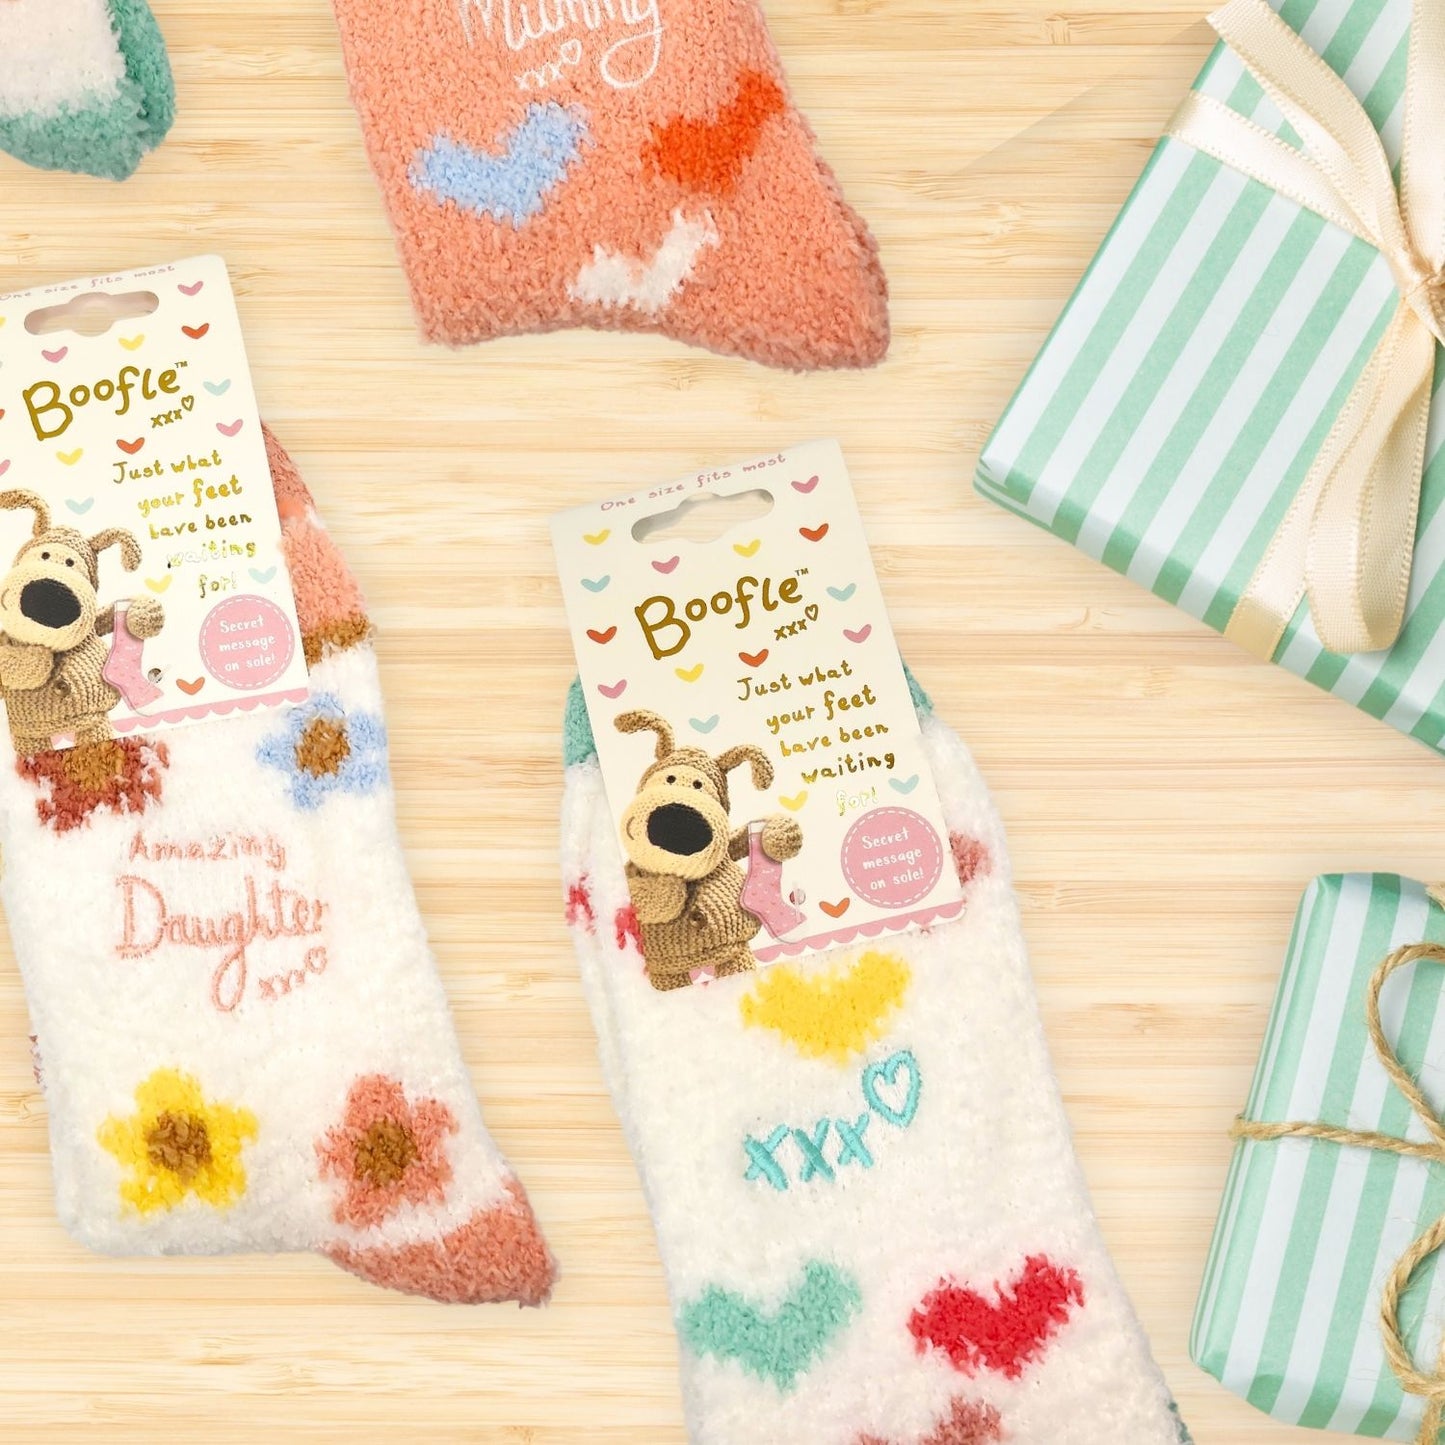 Boofle Snuggly Toes Flower Power Feet! Socks Gift Idea